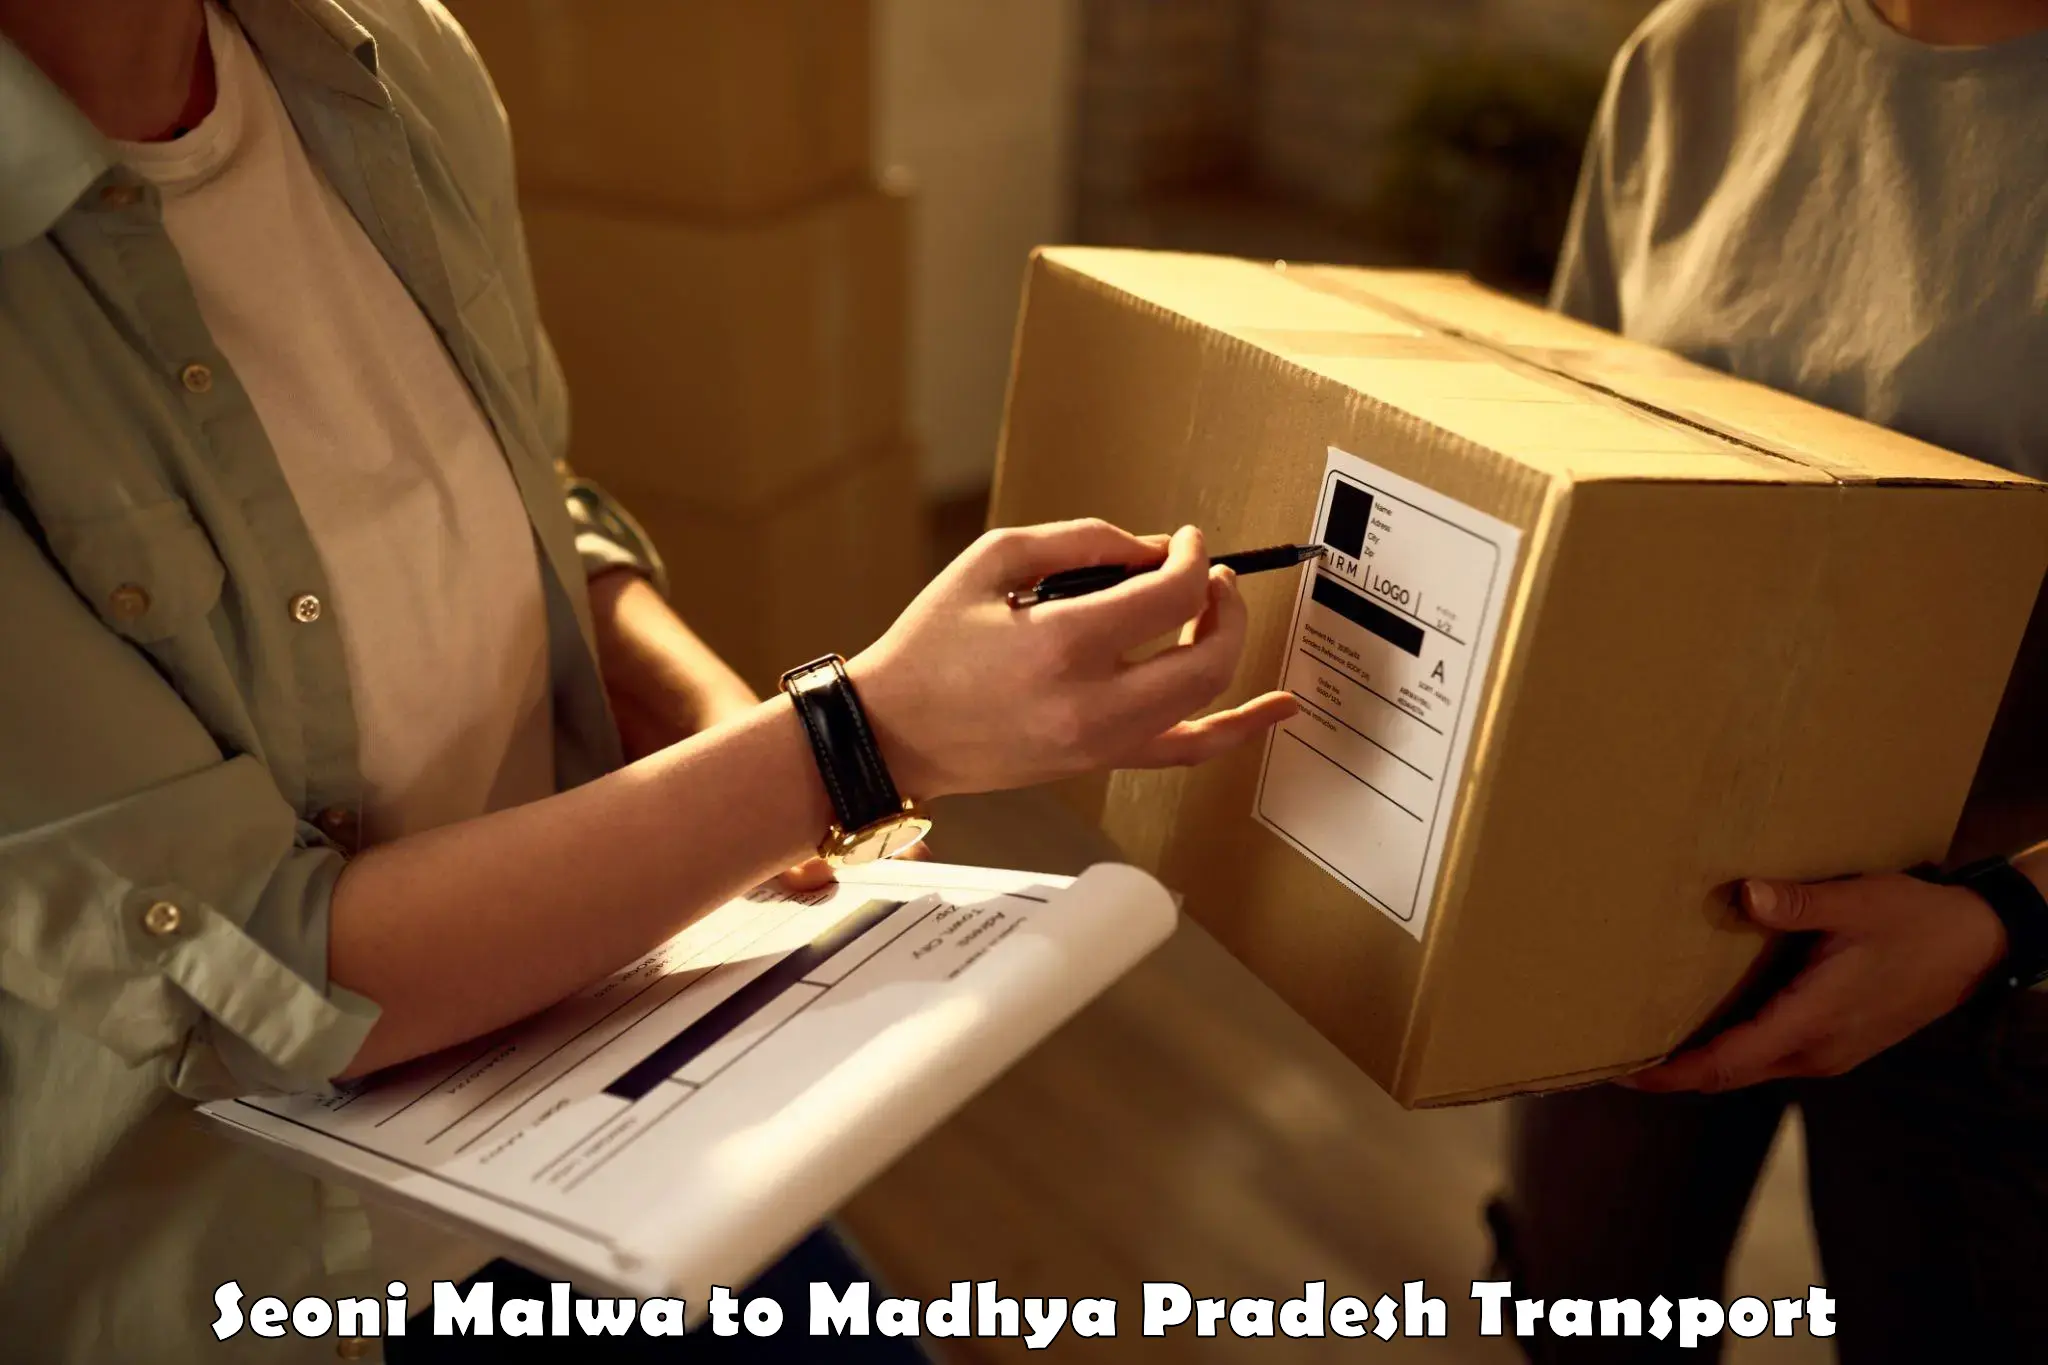 Goods delivery service Seoni Malwa to Lakhnadon